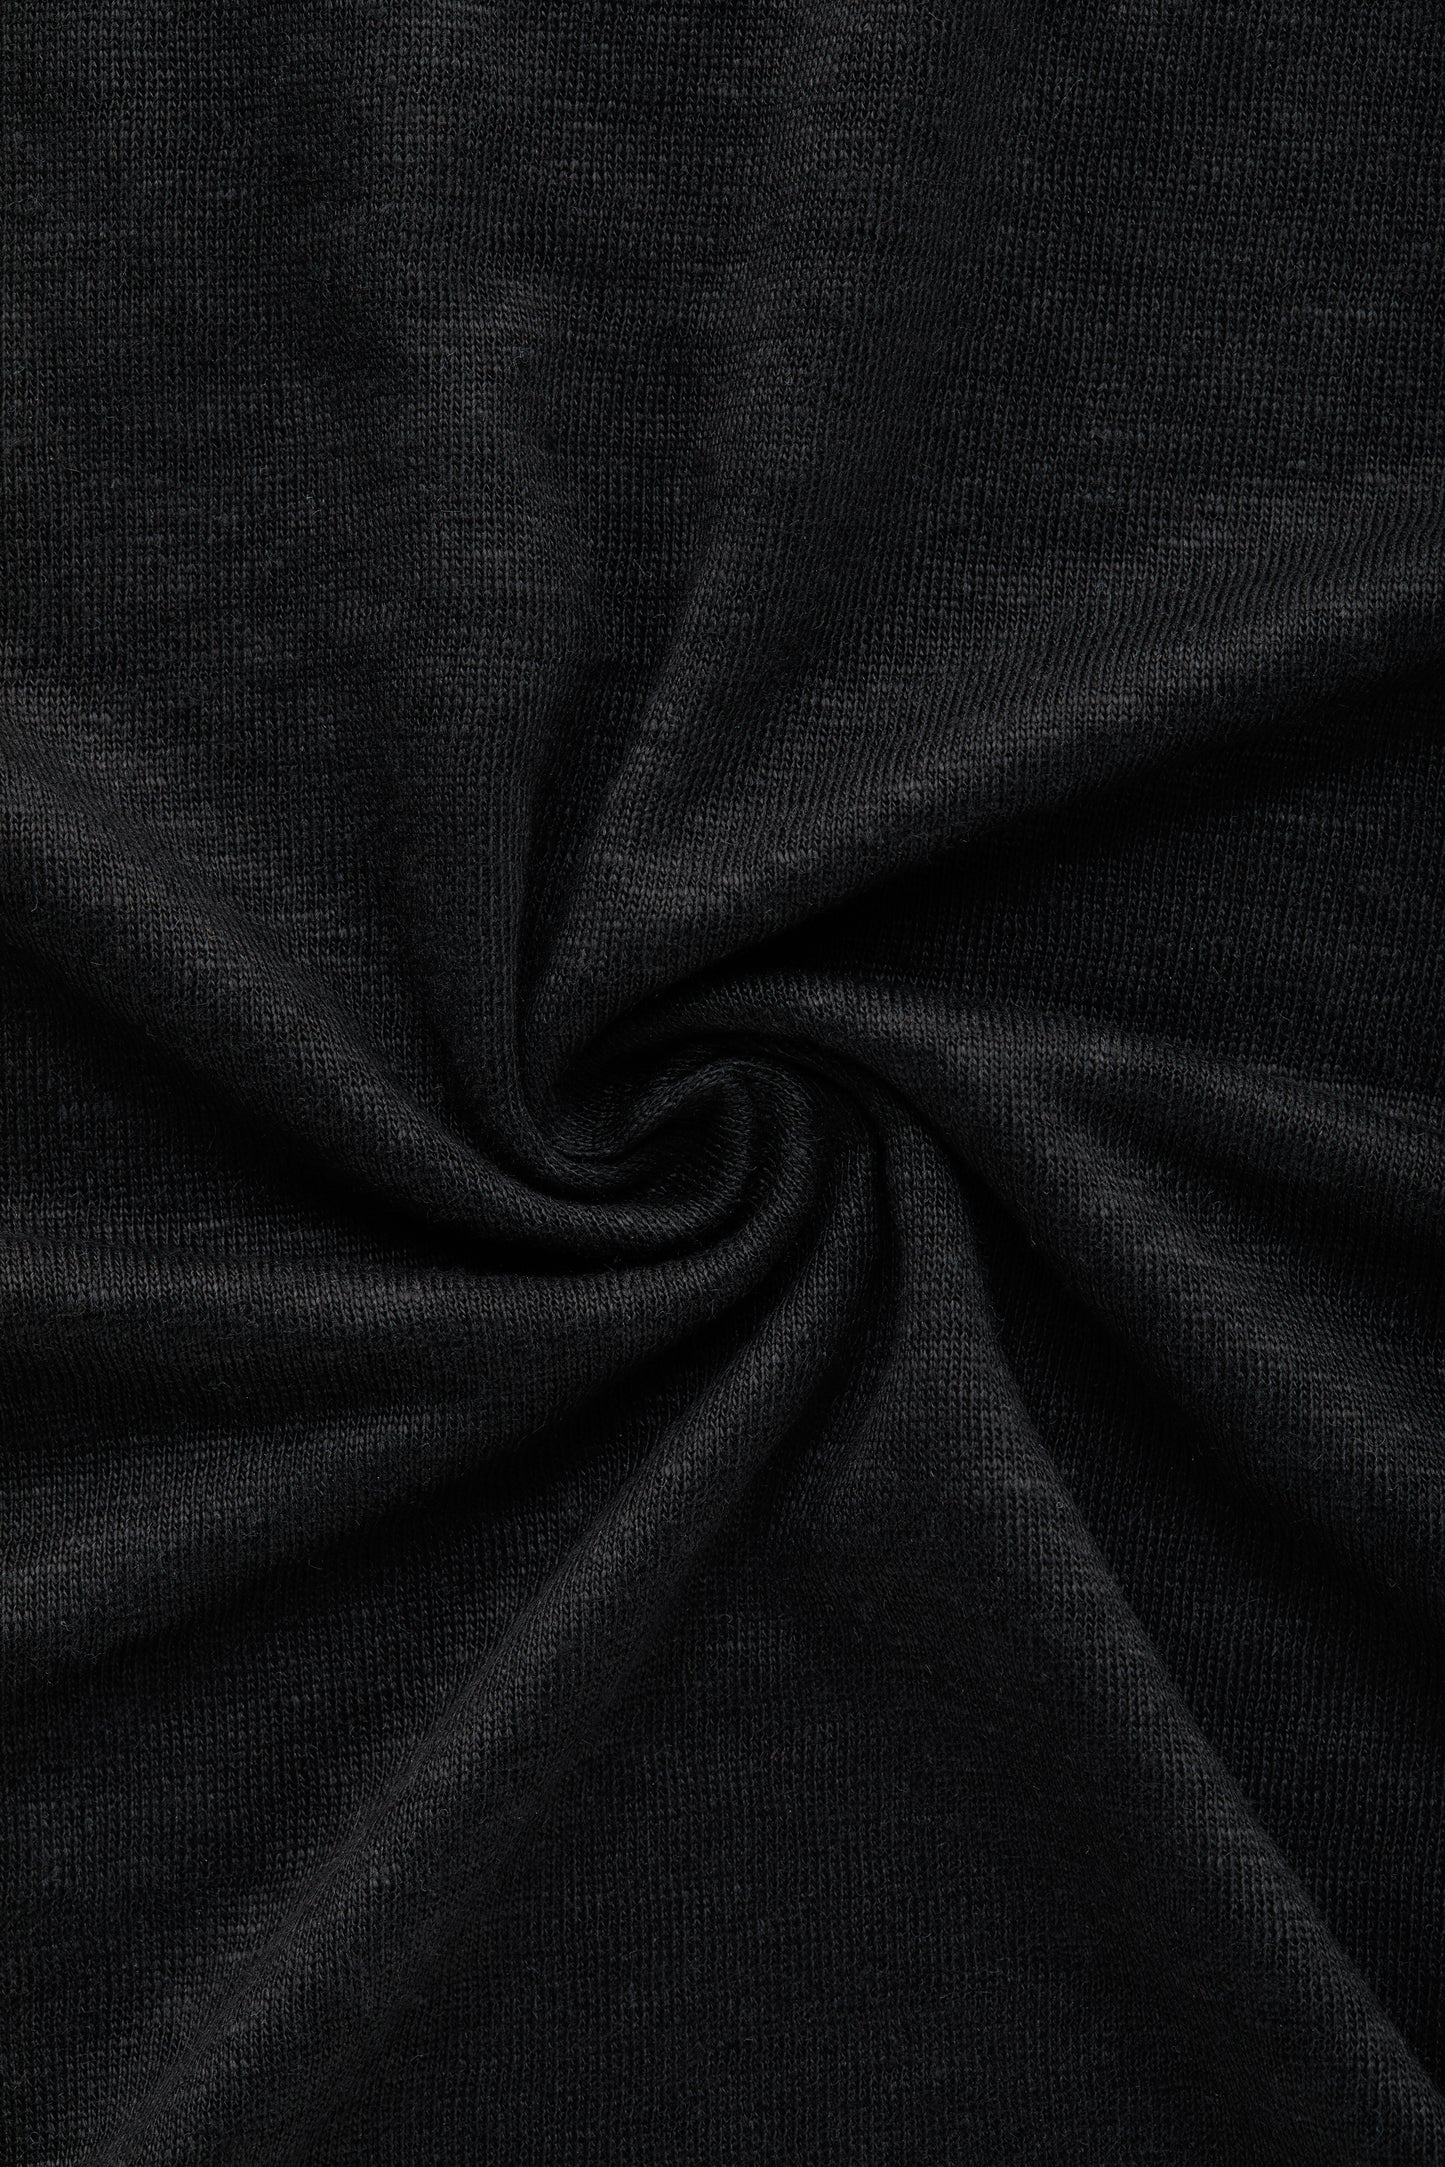 Short Sleeve Linen Polo Black